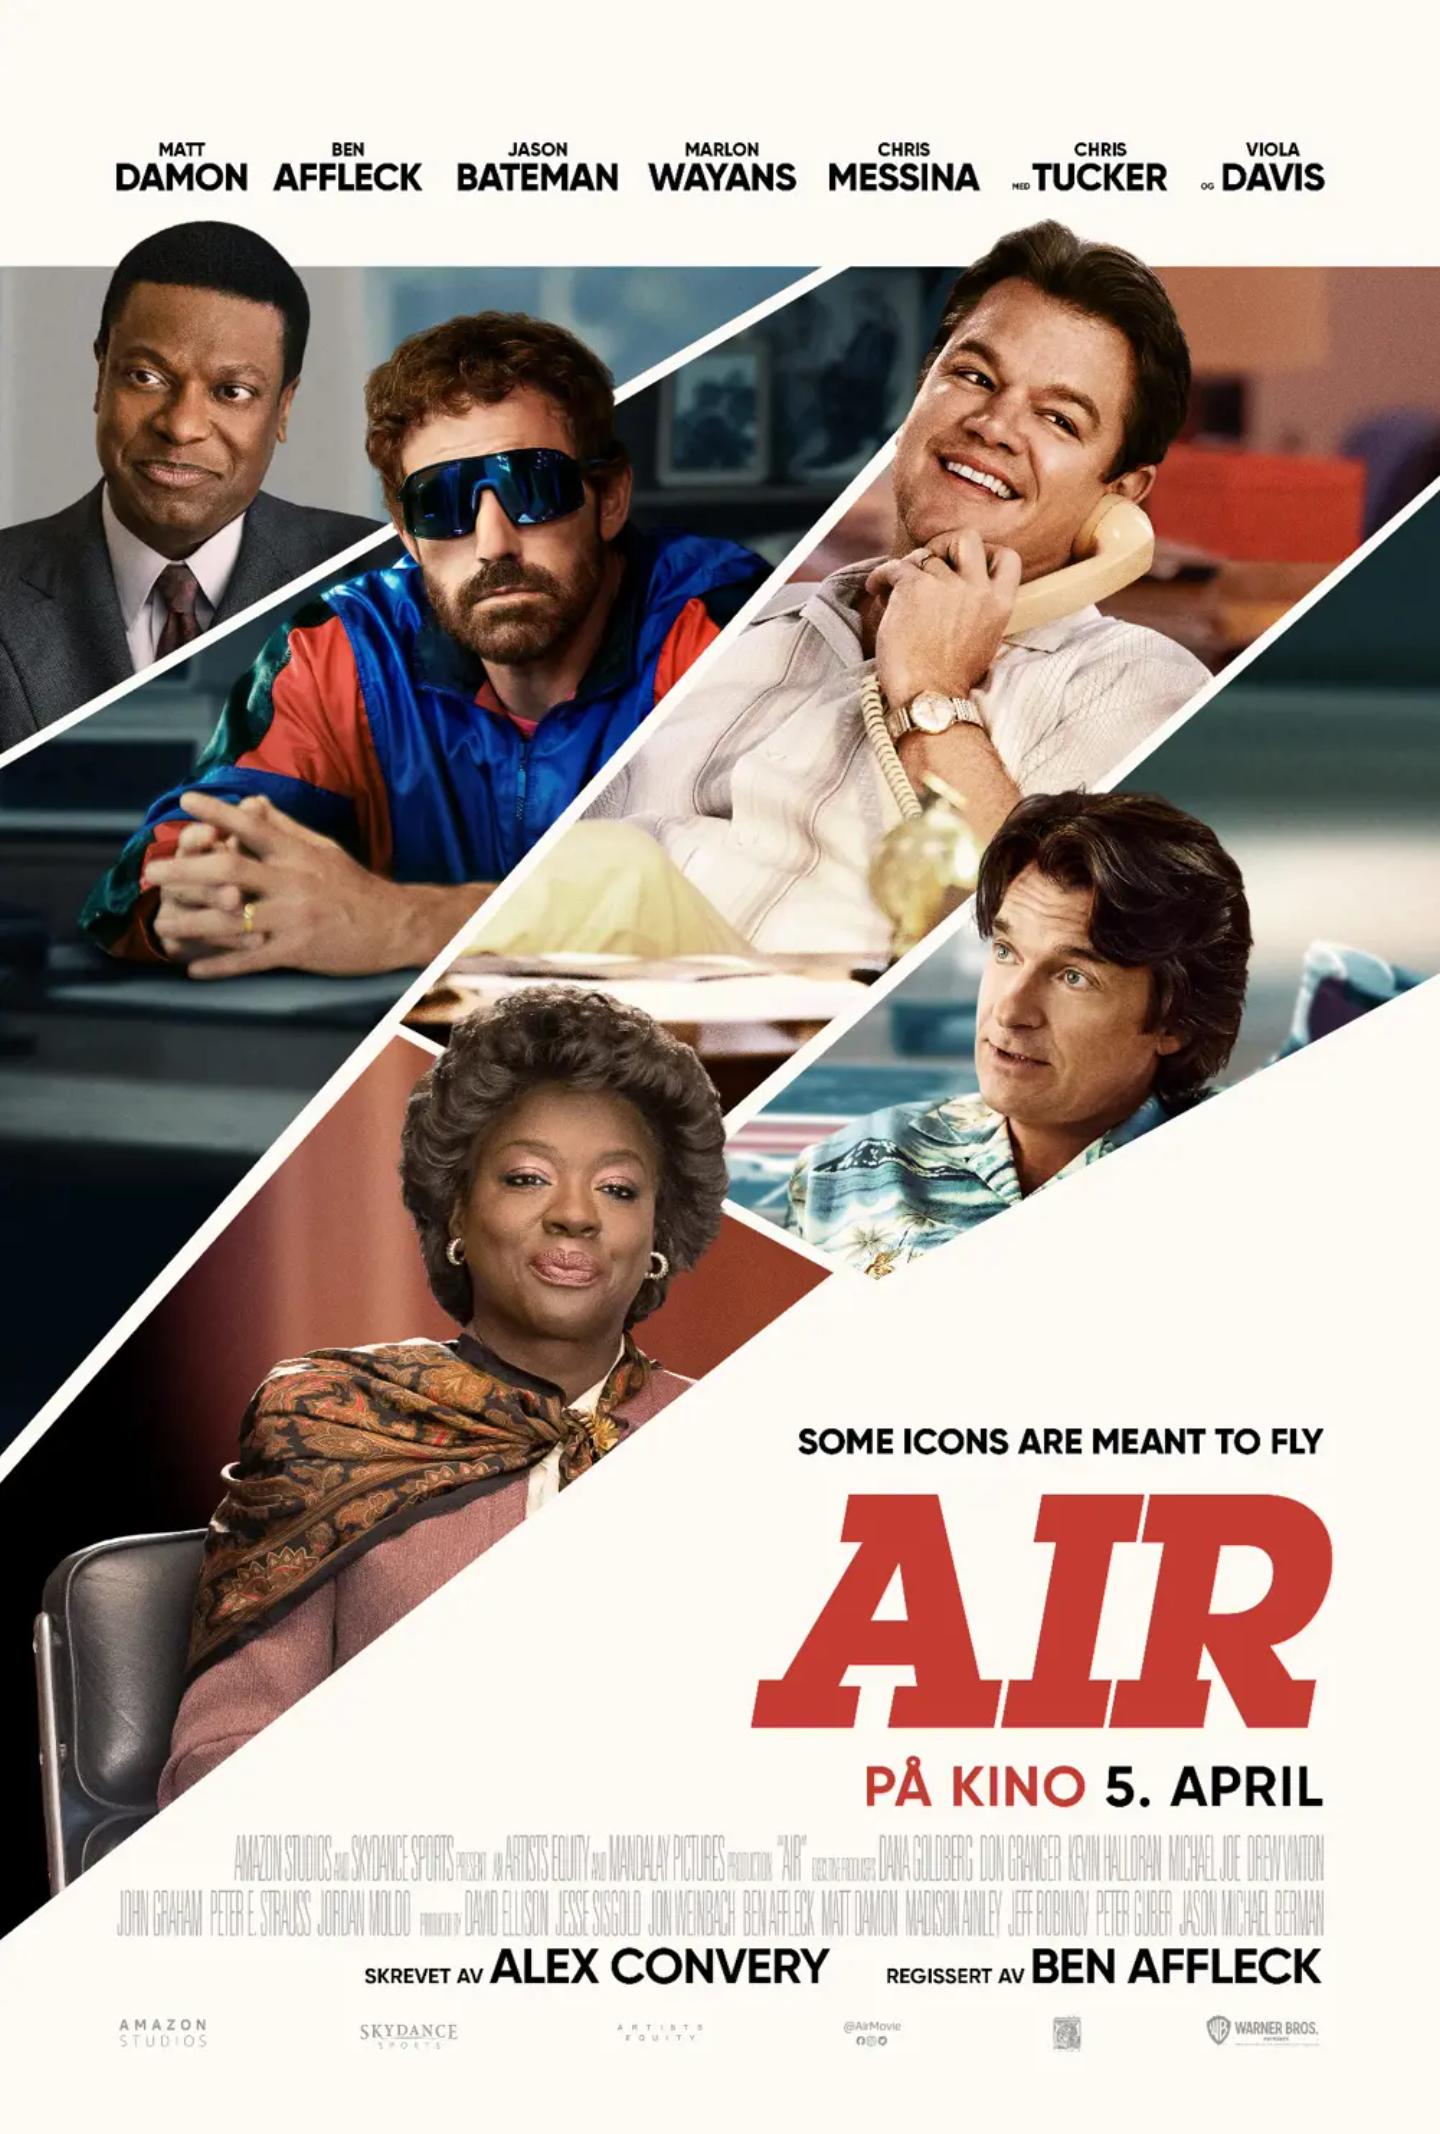 Plakat for 'Air'